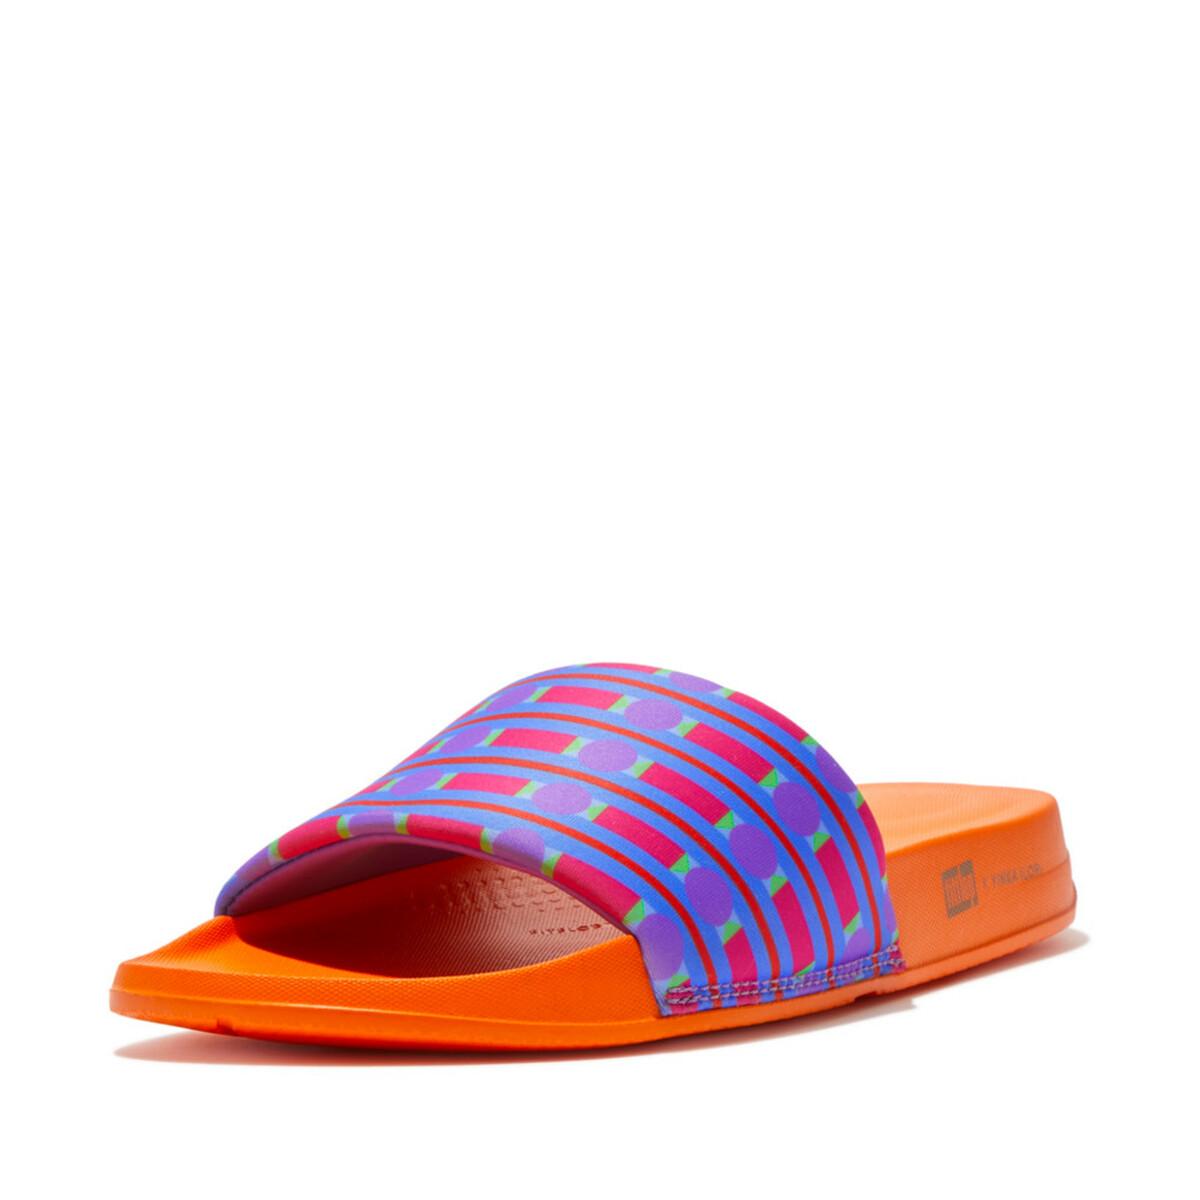 Buy Iqushion X Yinka Ilori Water-Resistant Slides Online | SKU:228-243-32-3  - Metro Shoes